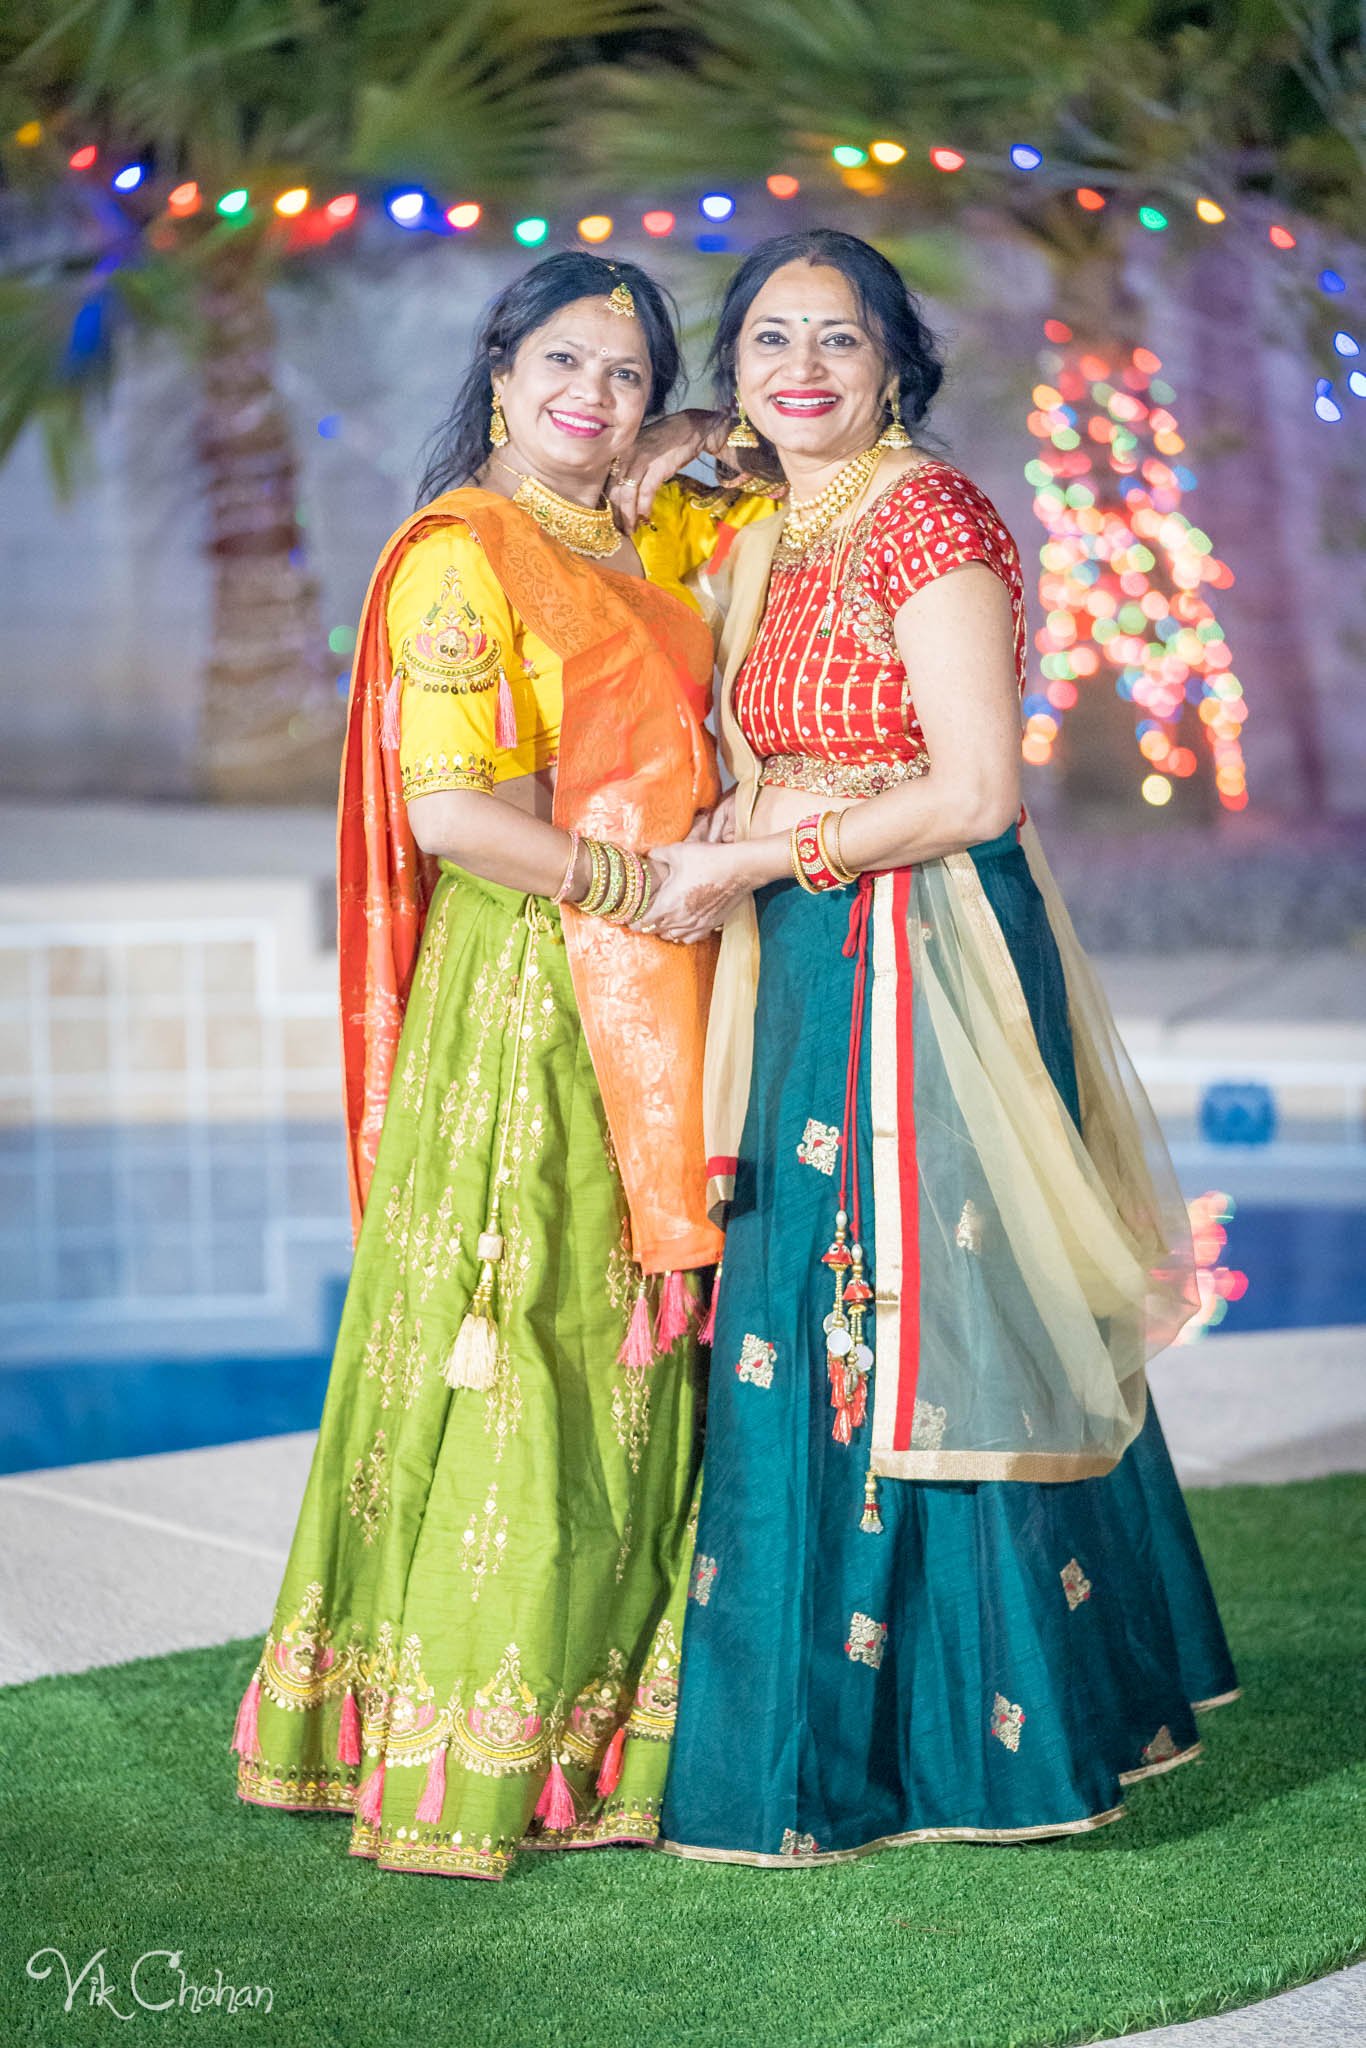 2022-02-04-Hely-&-Parth-Garba-Night-Indian-Wedding-Vik-Chohan-Photography-Photo-Booth-Social-Media-VCP-206.jpg